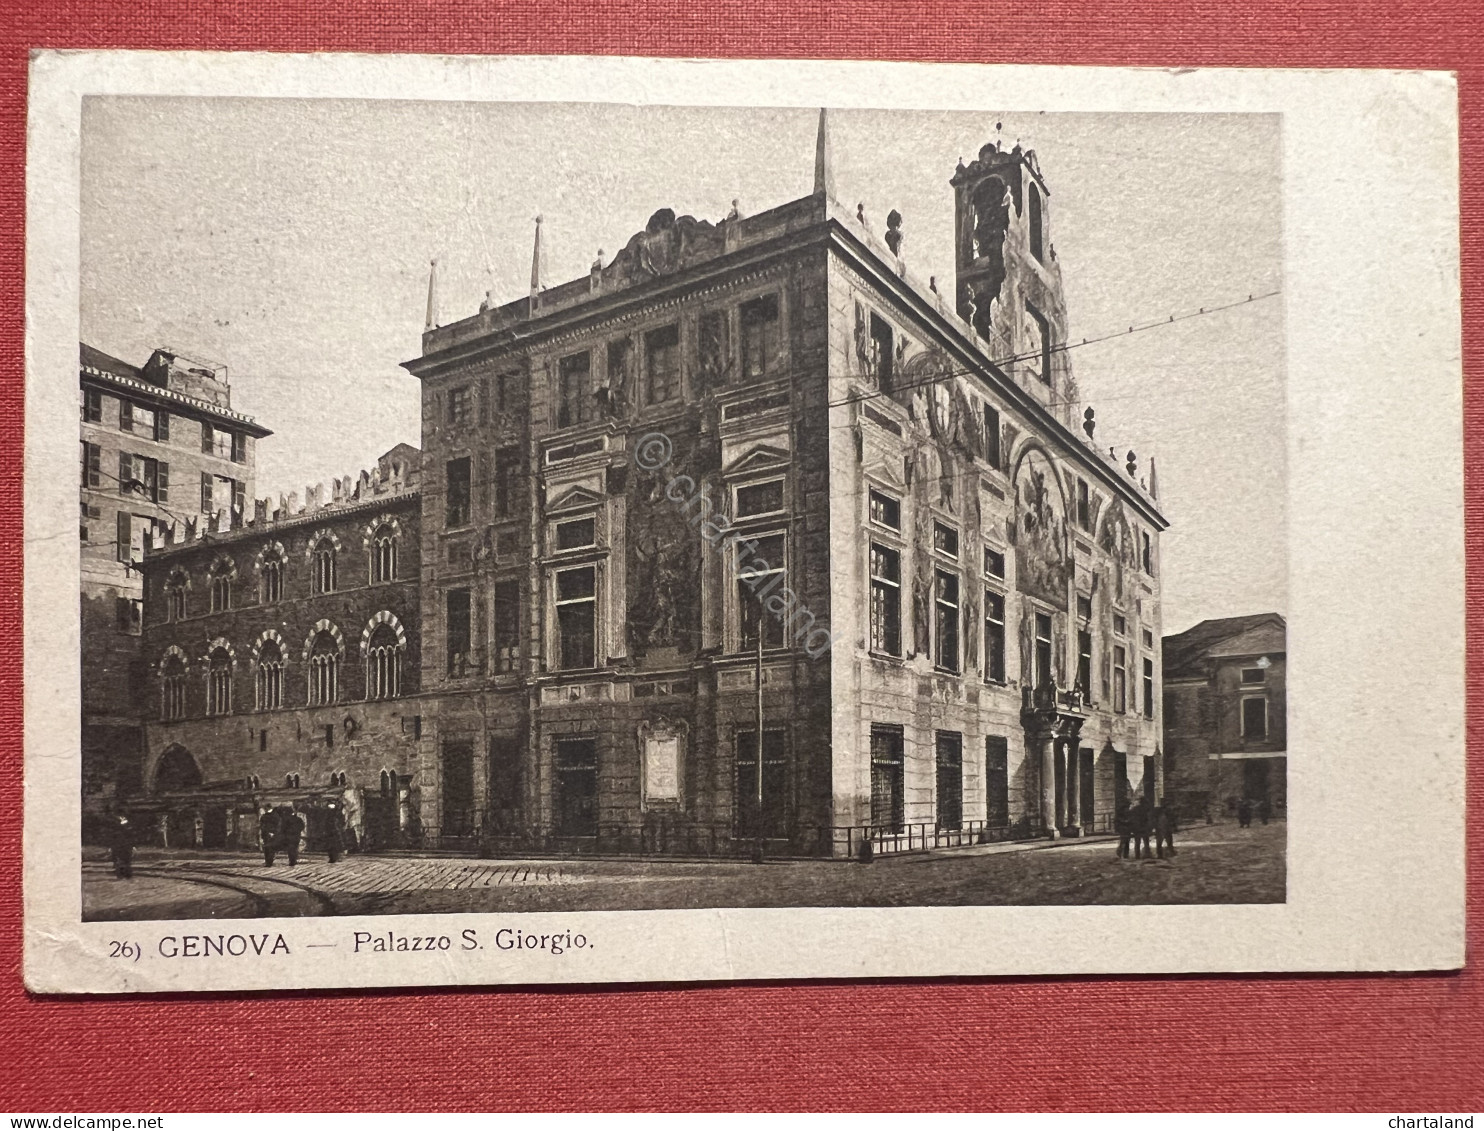 Cartolina - Genova - Palazzo S. Giorgio - 1929 - Genova (Genoa)